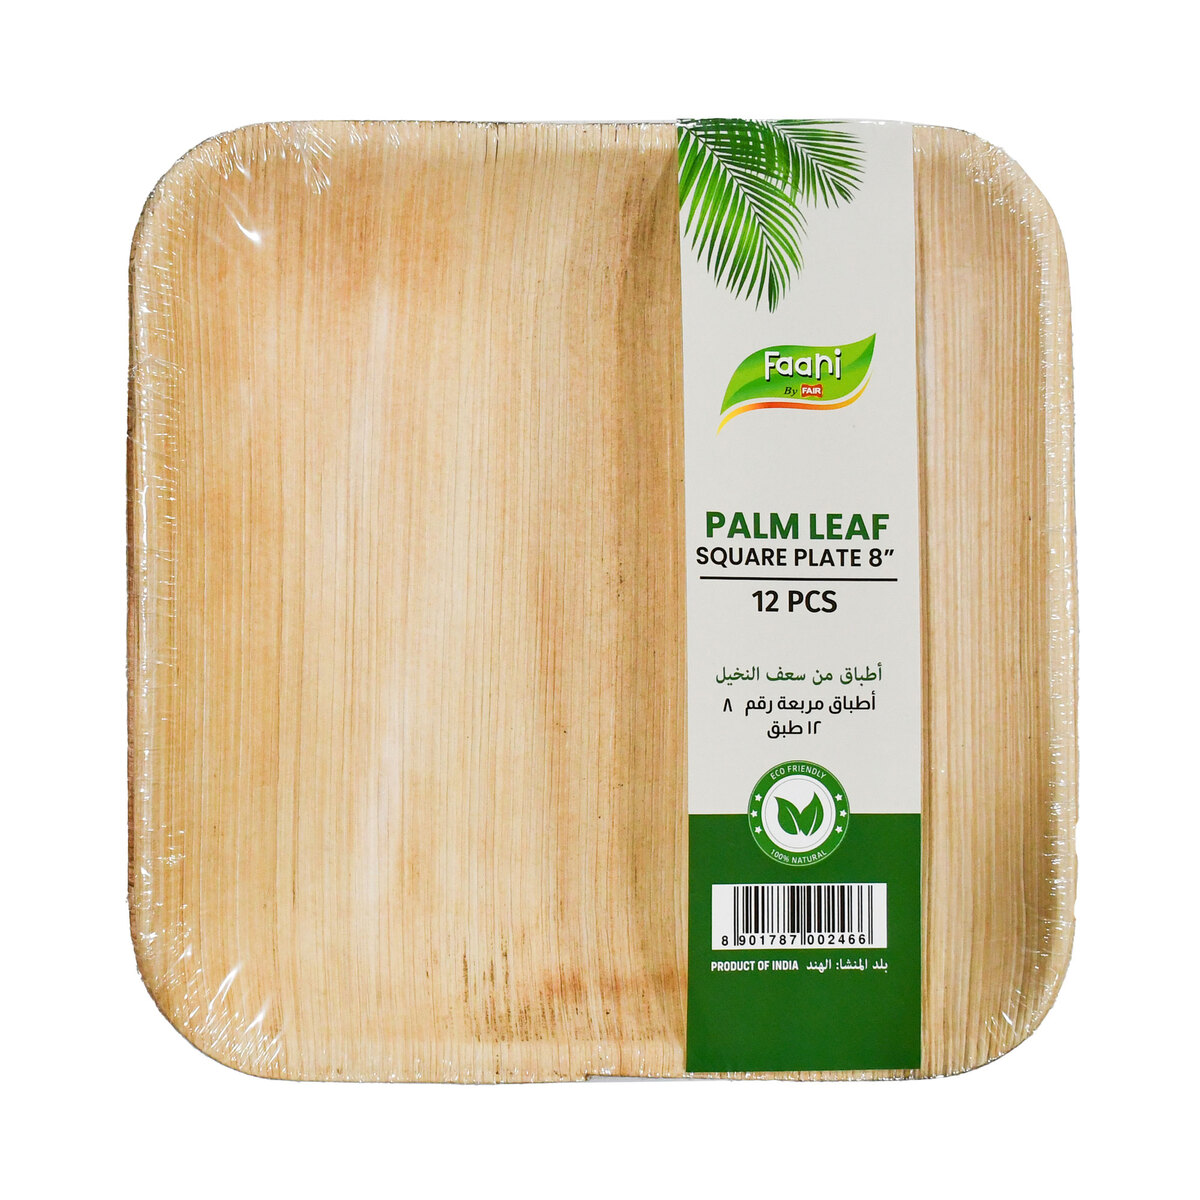 Faani Palm Leaf Square Plate 8" 12 pcs